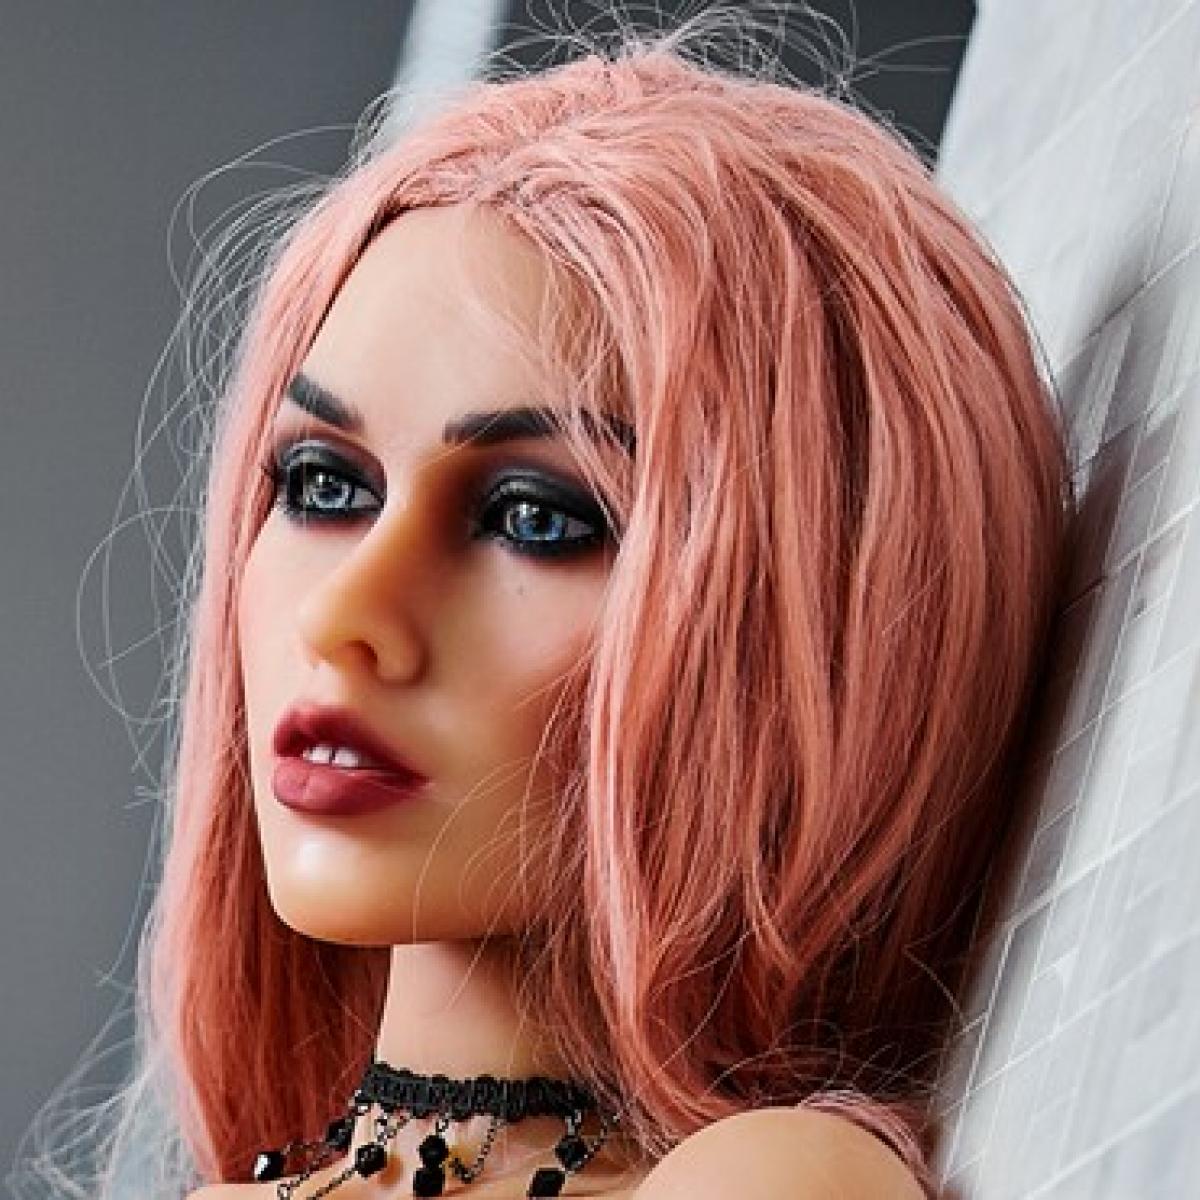 Neodoll Racy Selina - Sex Doll Head - M16 Compatible - Tan